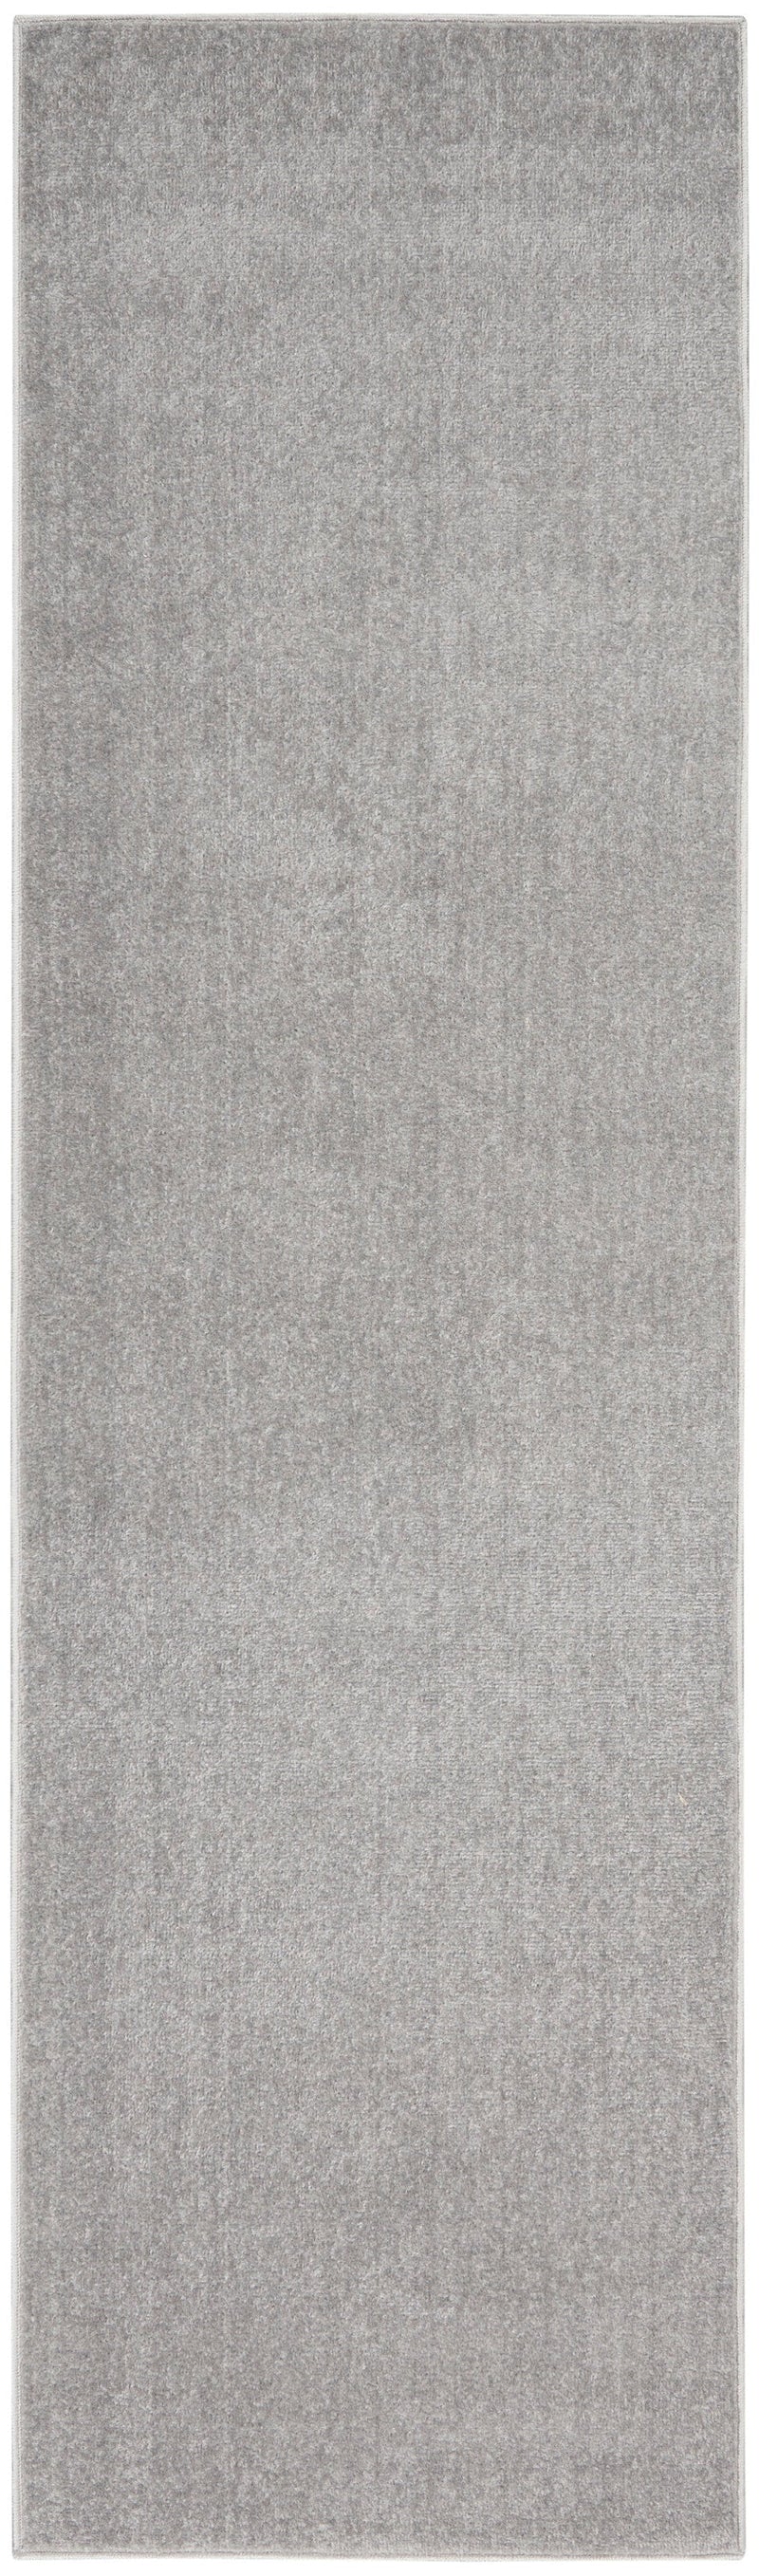 media image for nourison essentials silver grey rug by nourison 99446062369 redo 4 225